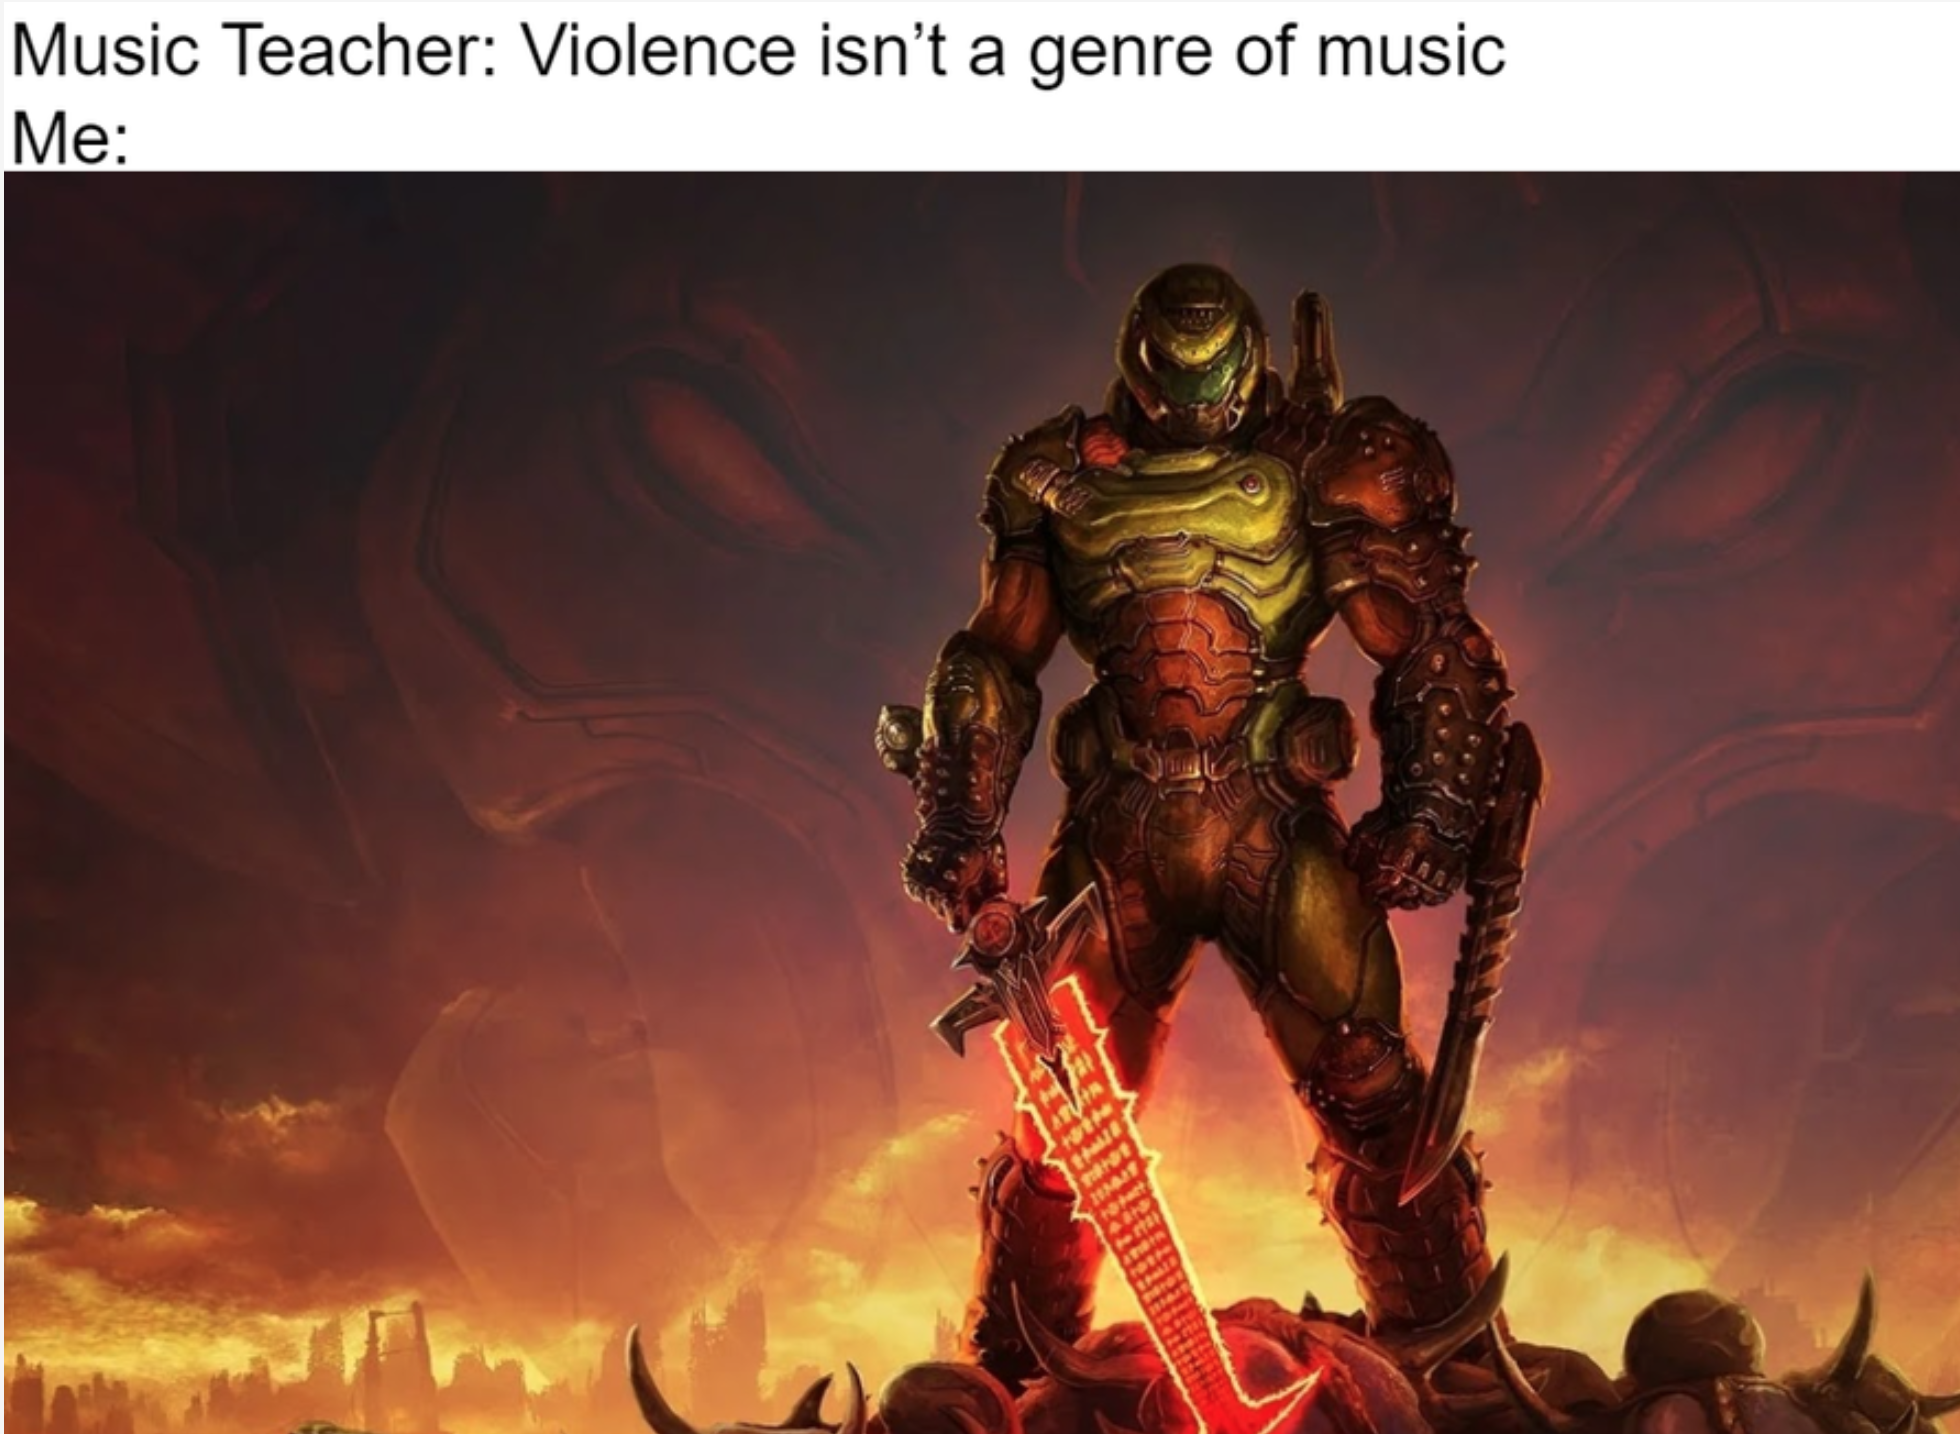 funny gaming memes - doom eternal series 5 - Music Teacher Violence isn't a genre of music Me